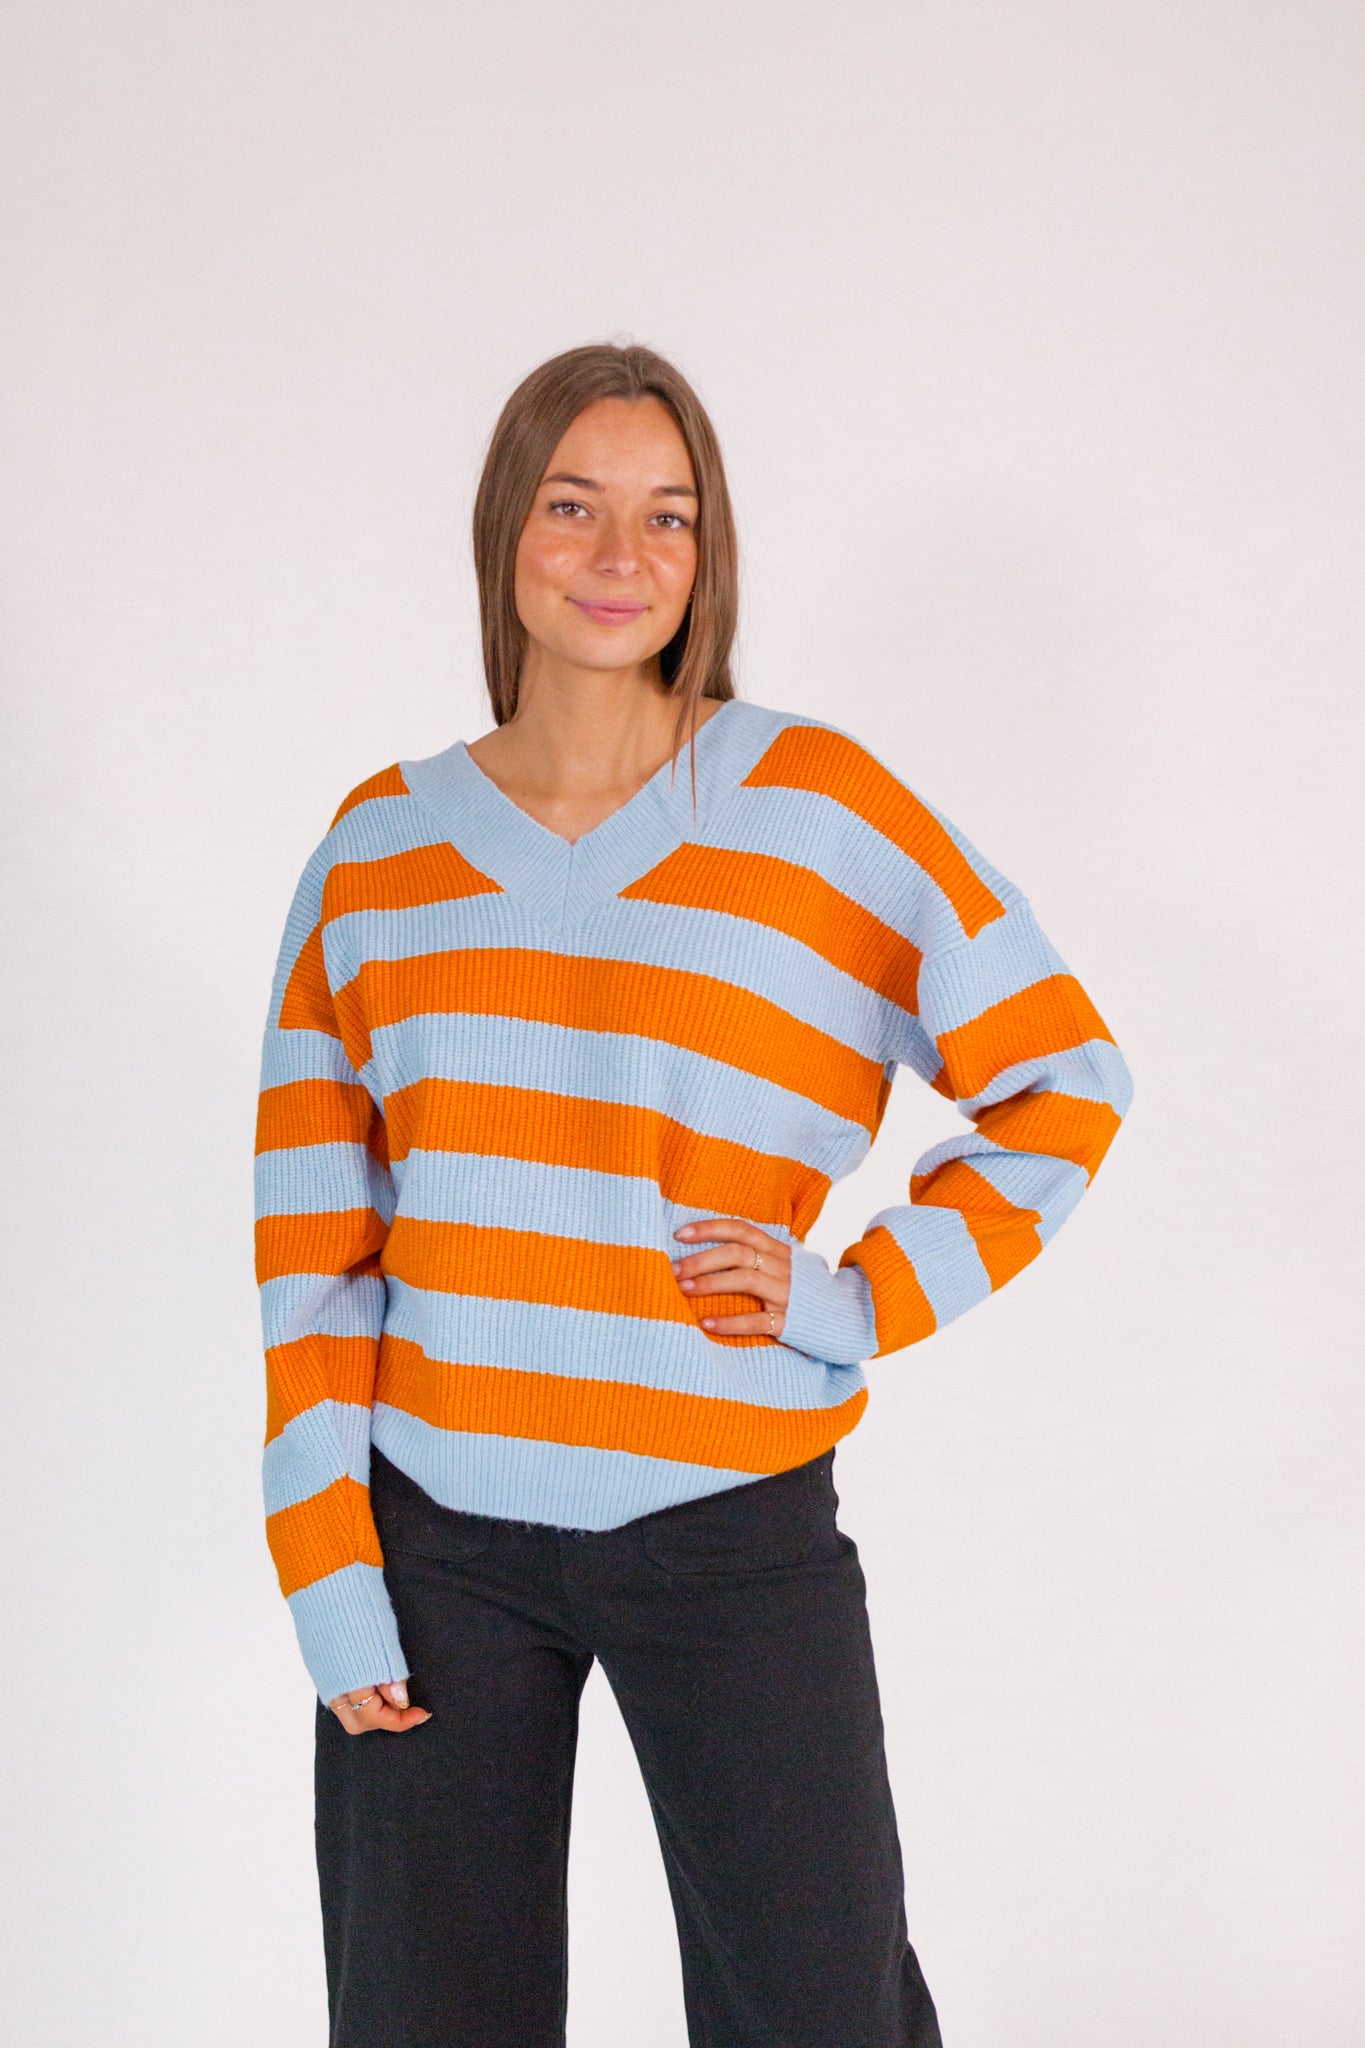 Avenue Striped Sweater